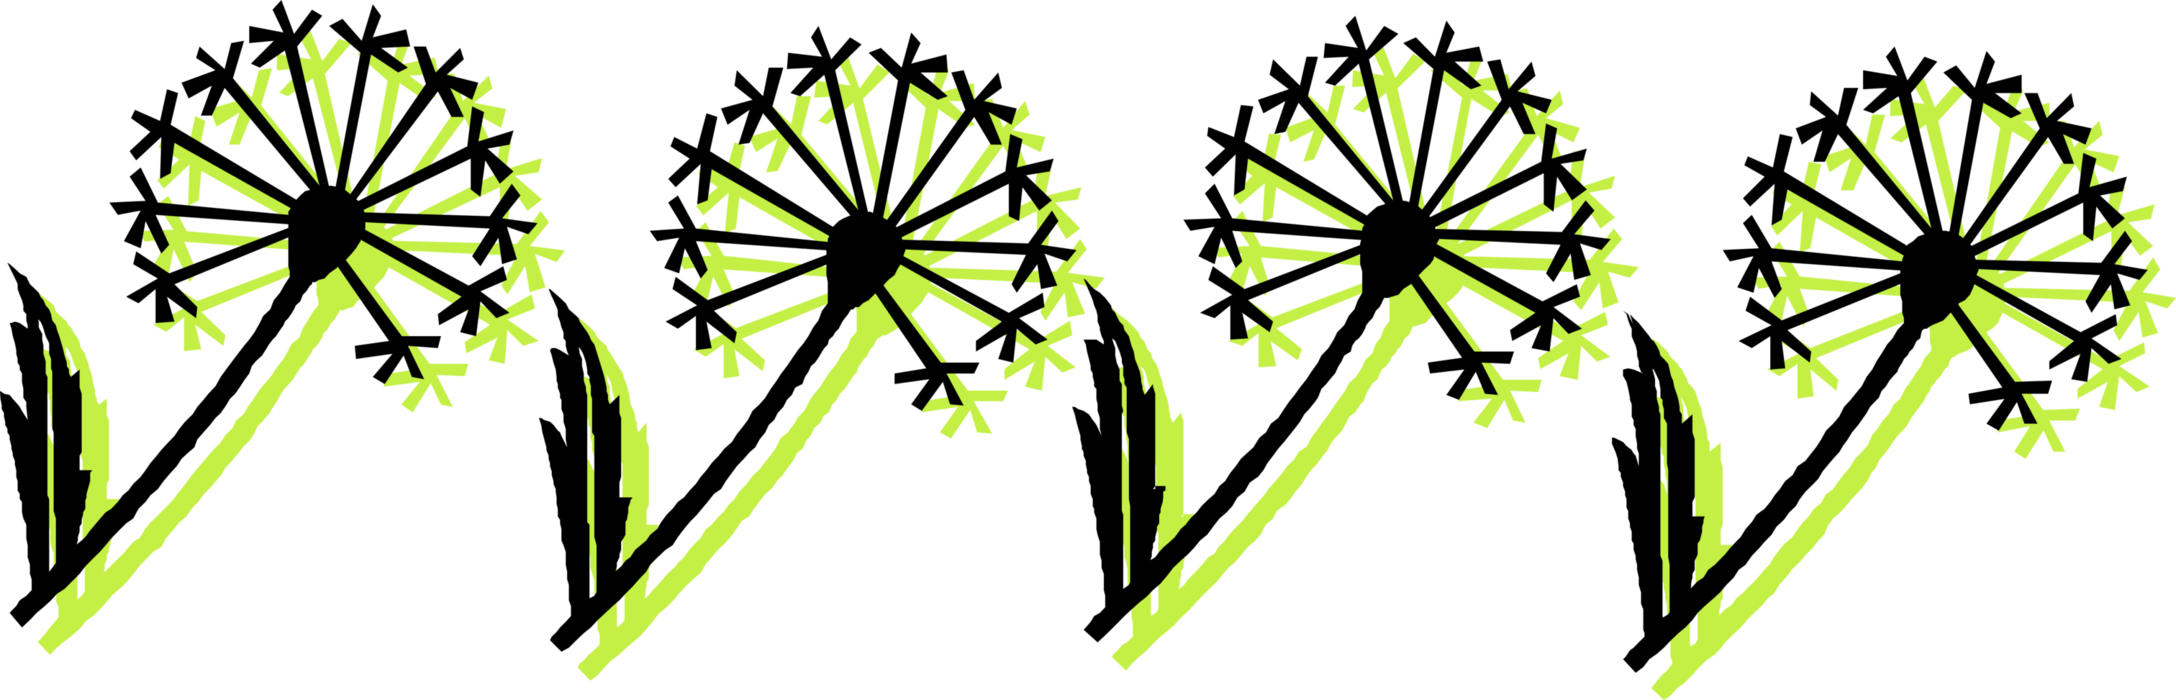 Vector Illustration of Flowering Dandelion Seeds Blowing in the Wind